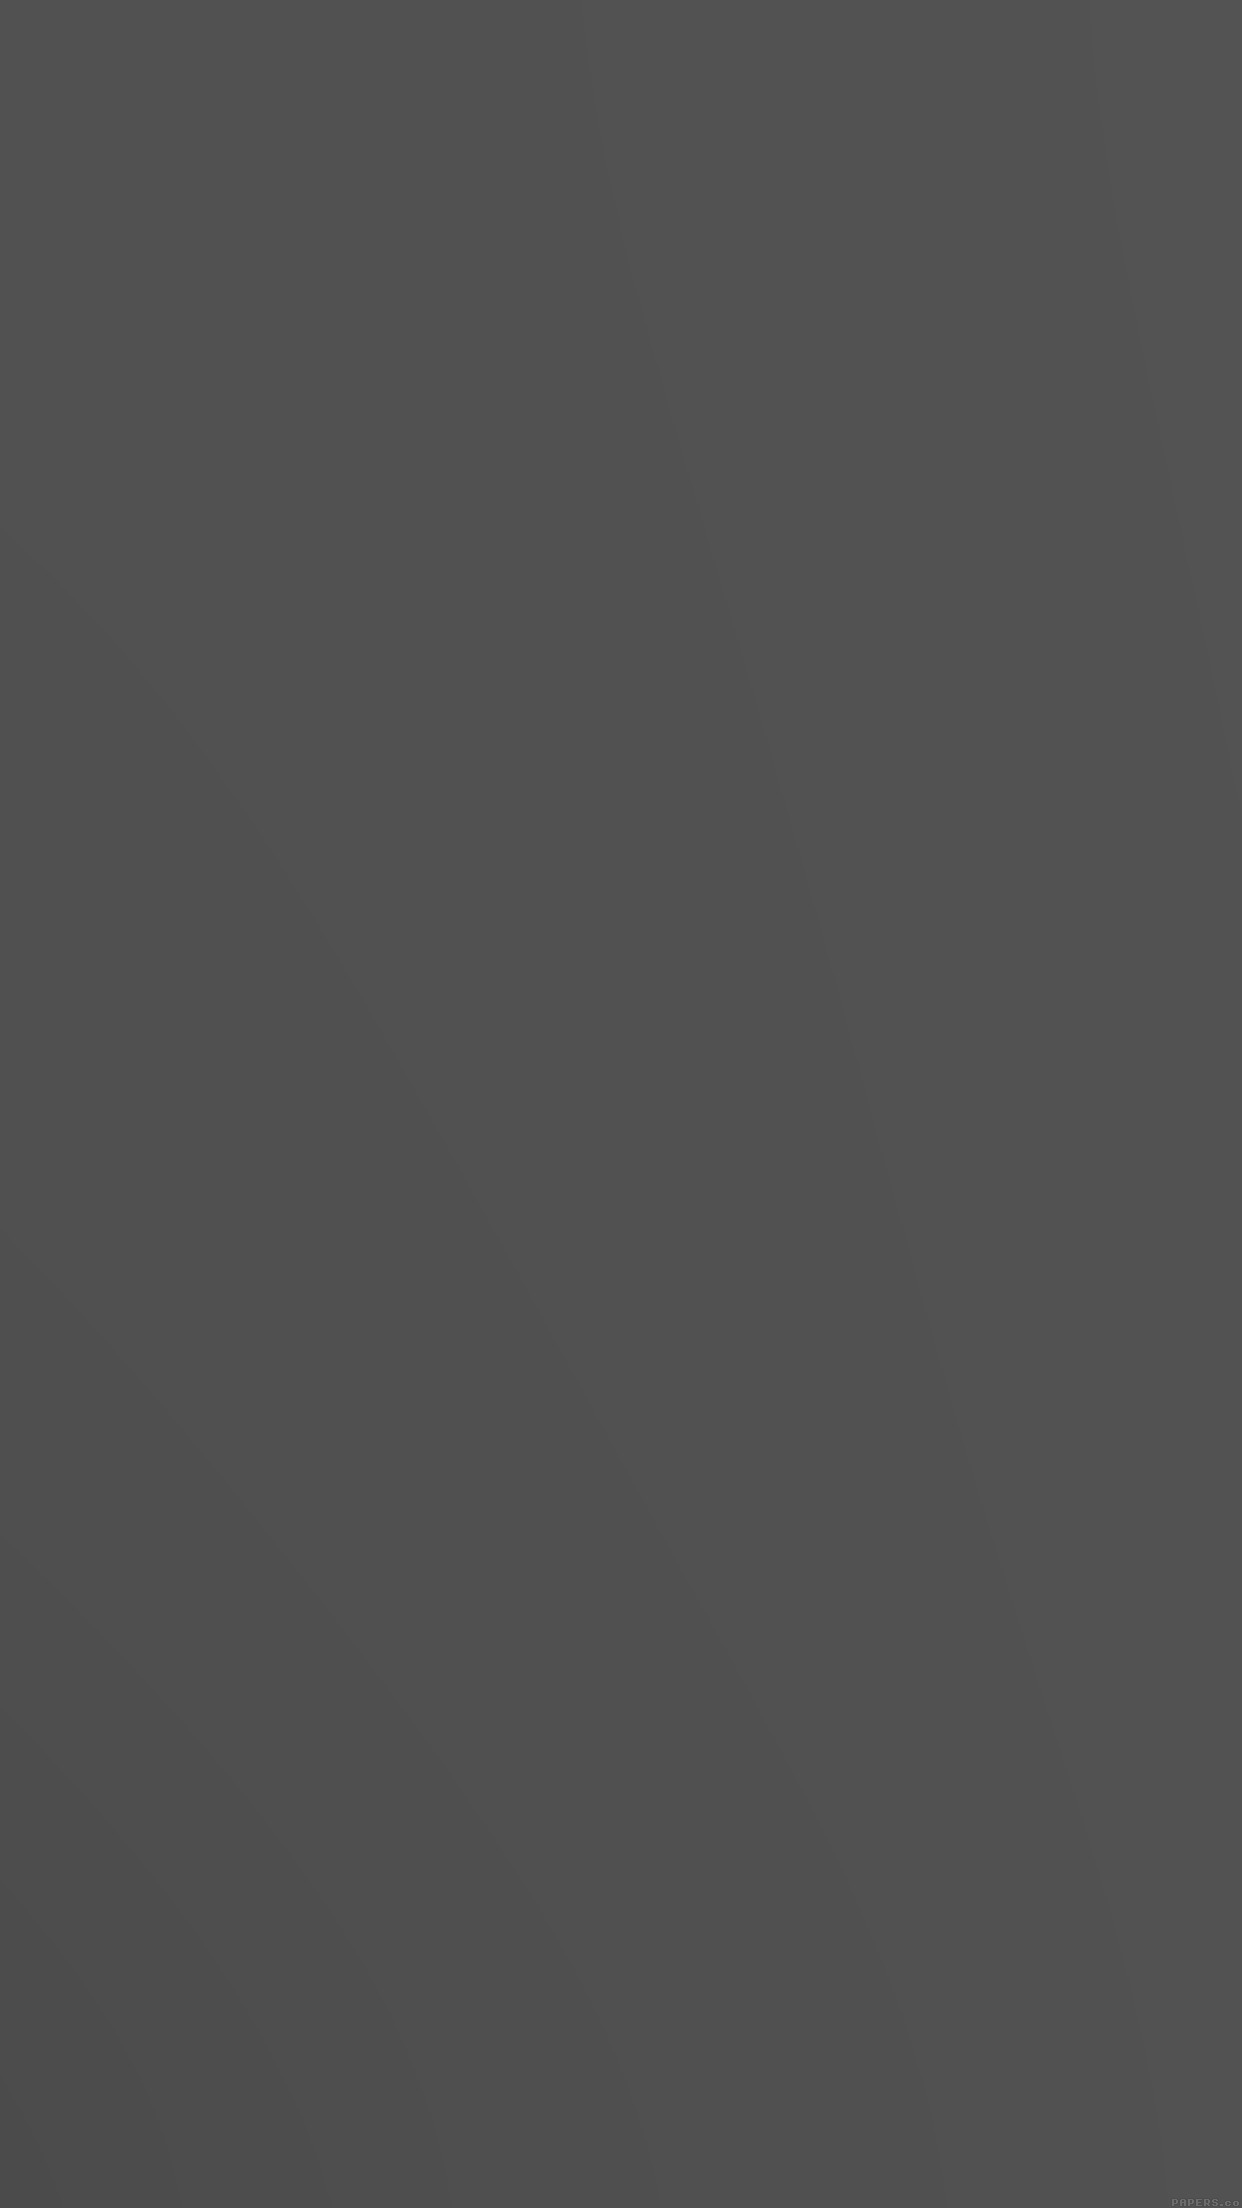 Apple Slate Gray Blurry Gradation Blur Android wallpaper